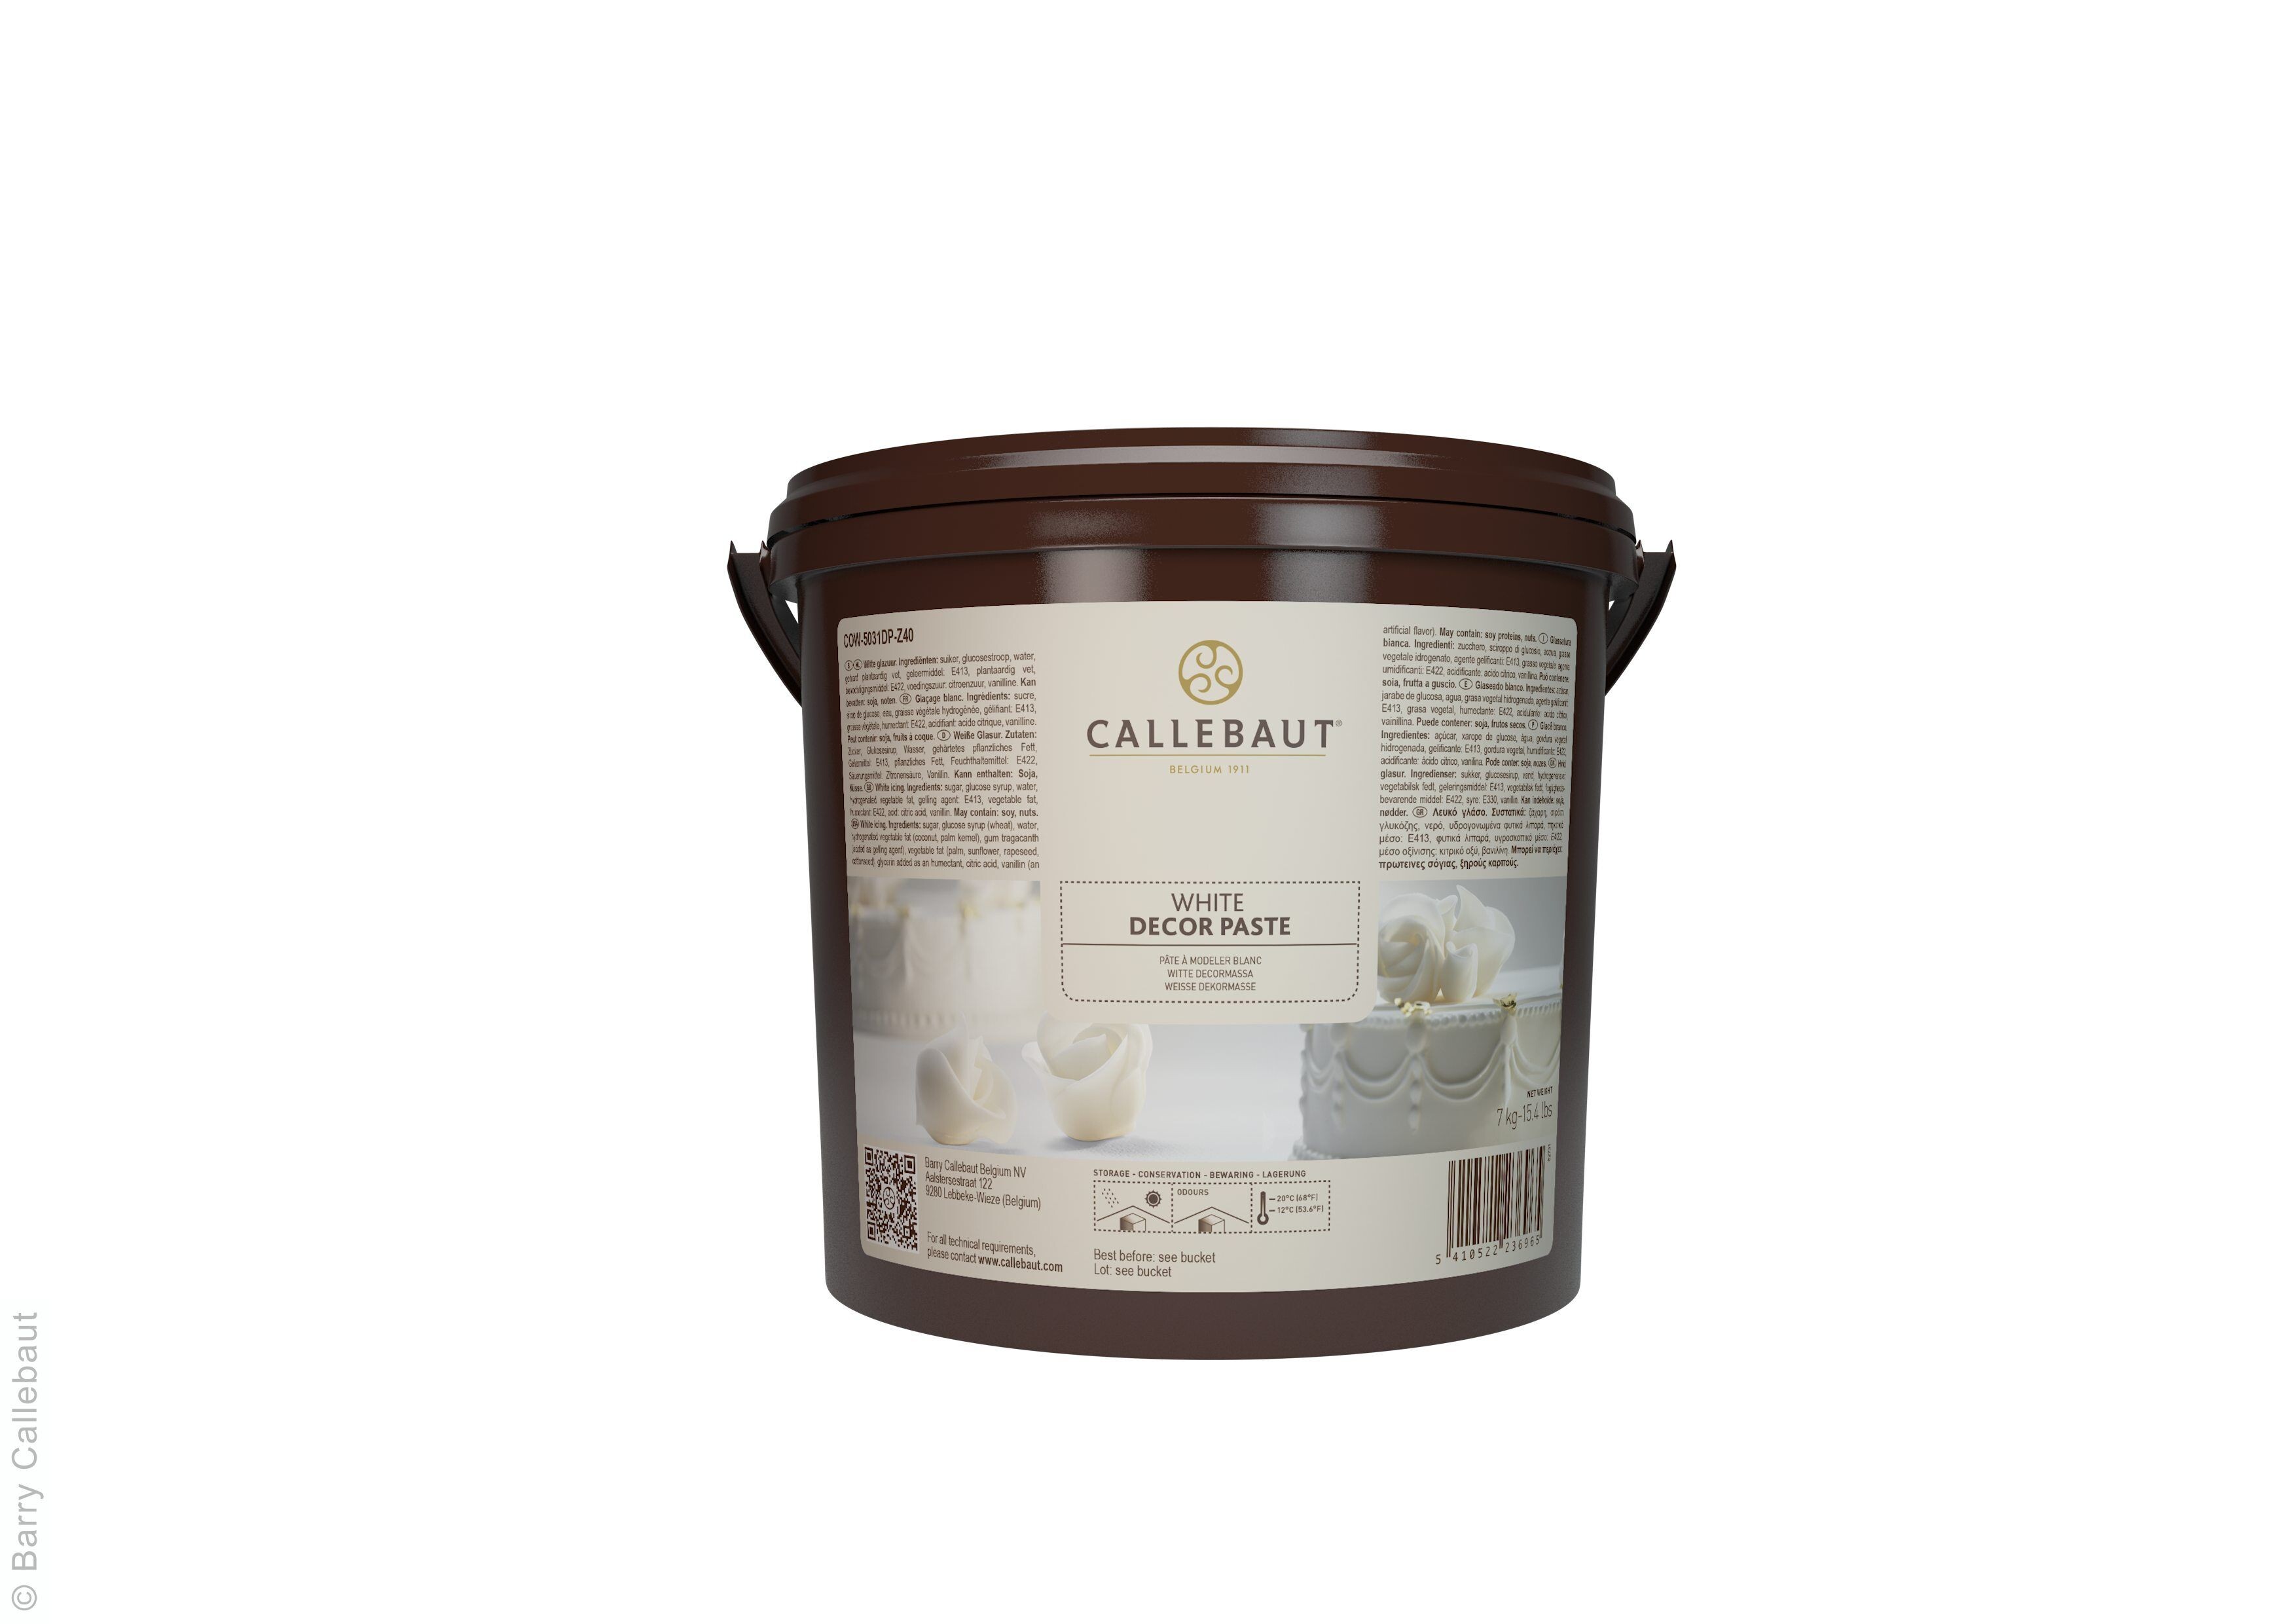 Callebaut White Icing and Decor Paste 7kg